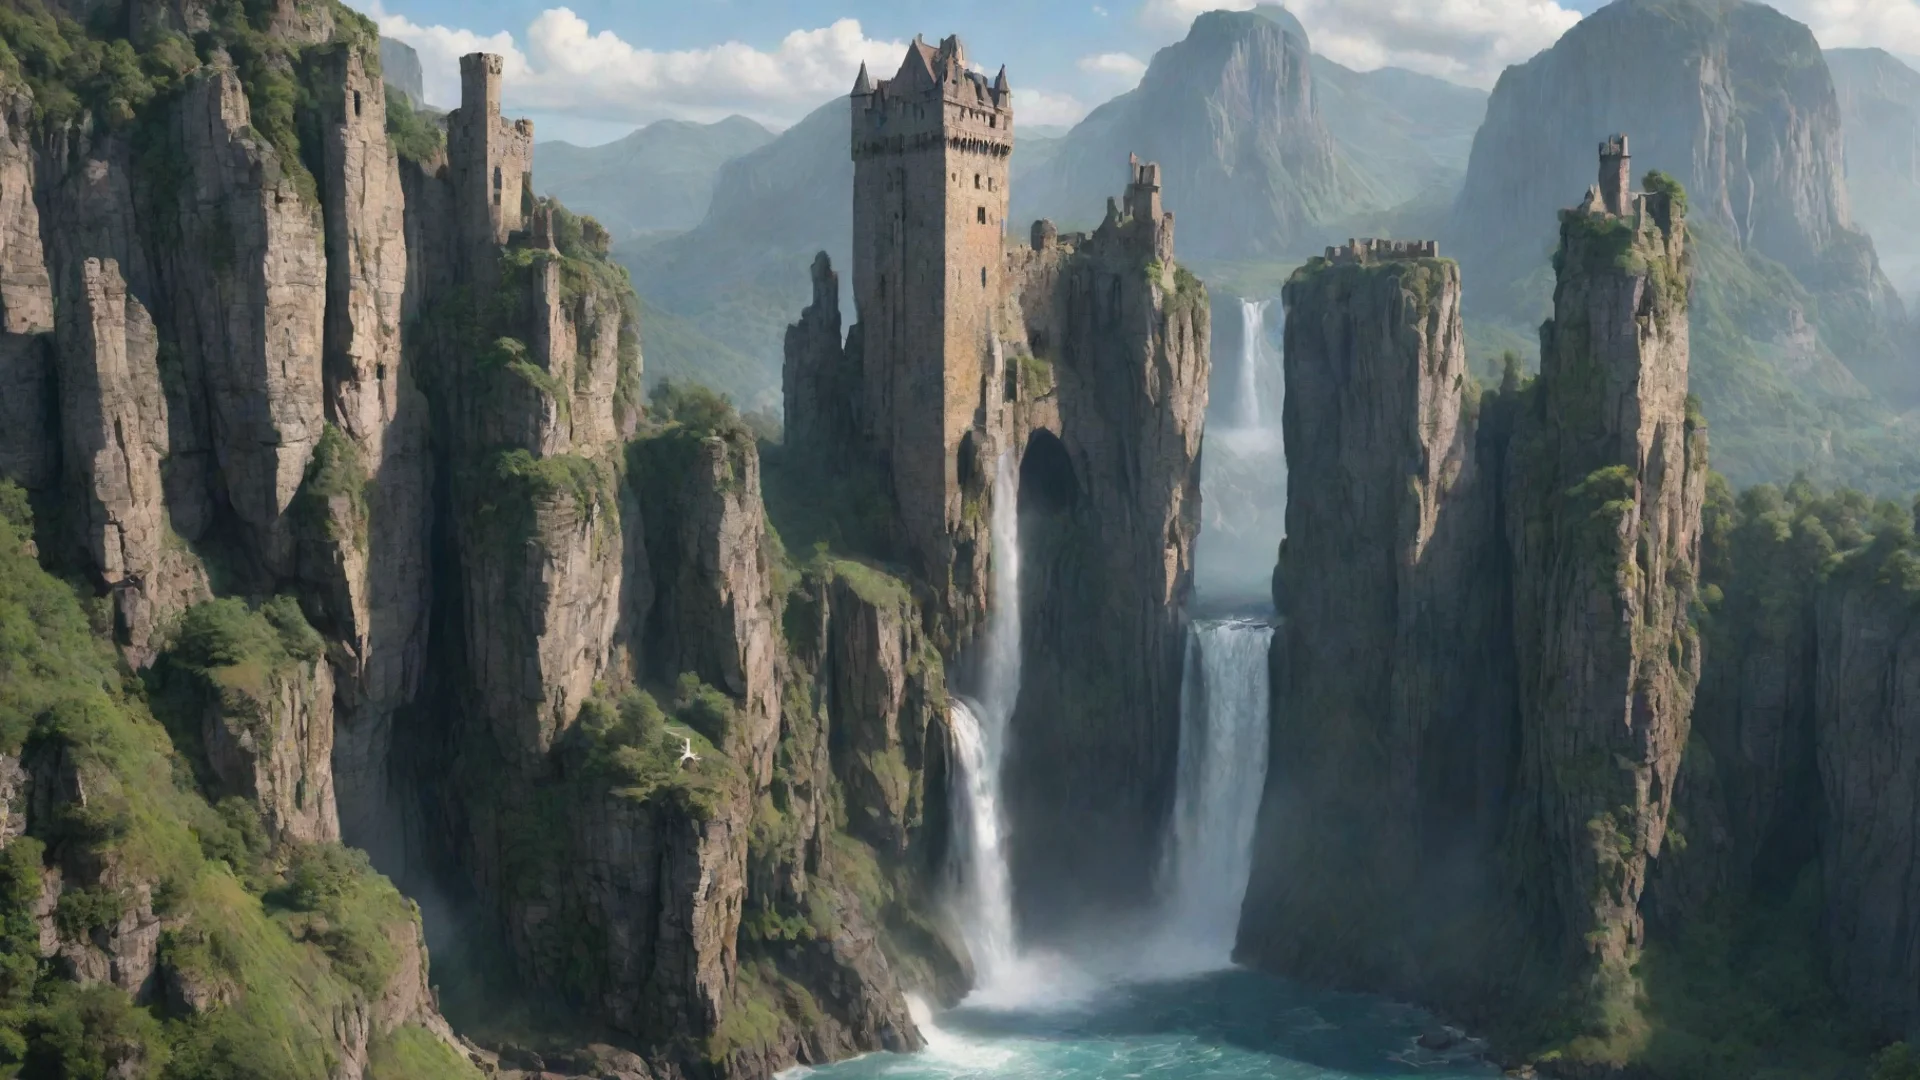 castle huge cliffs waterfalls relaxing environment hd aesthetic wide